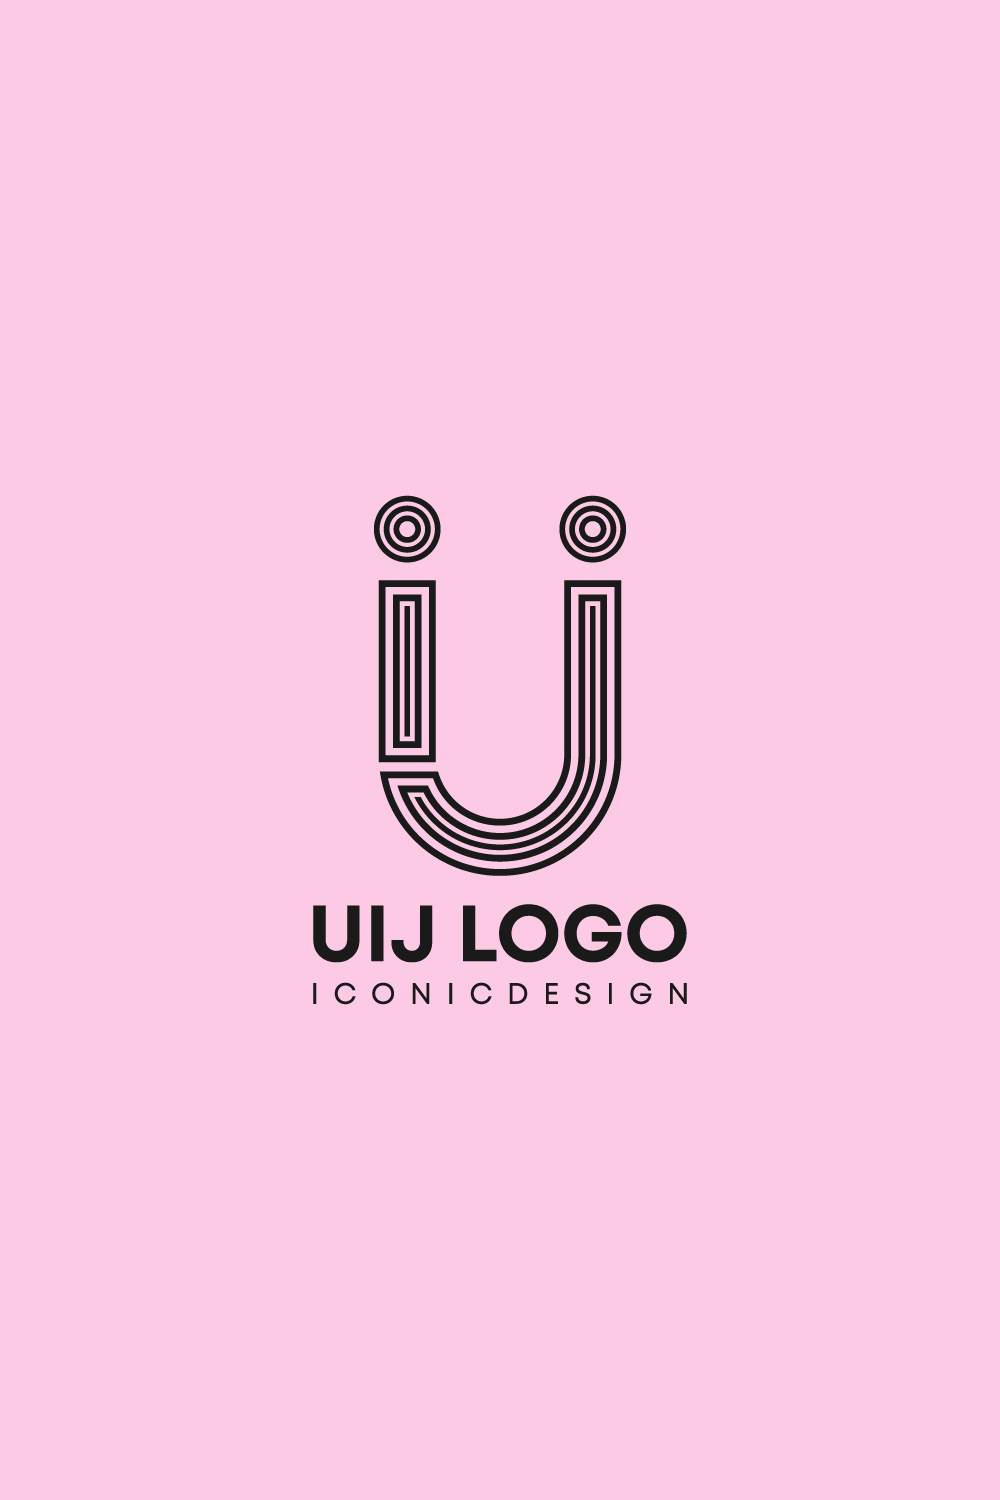 UIJ logo pinterest preview image.